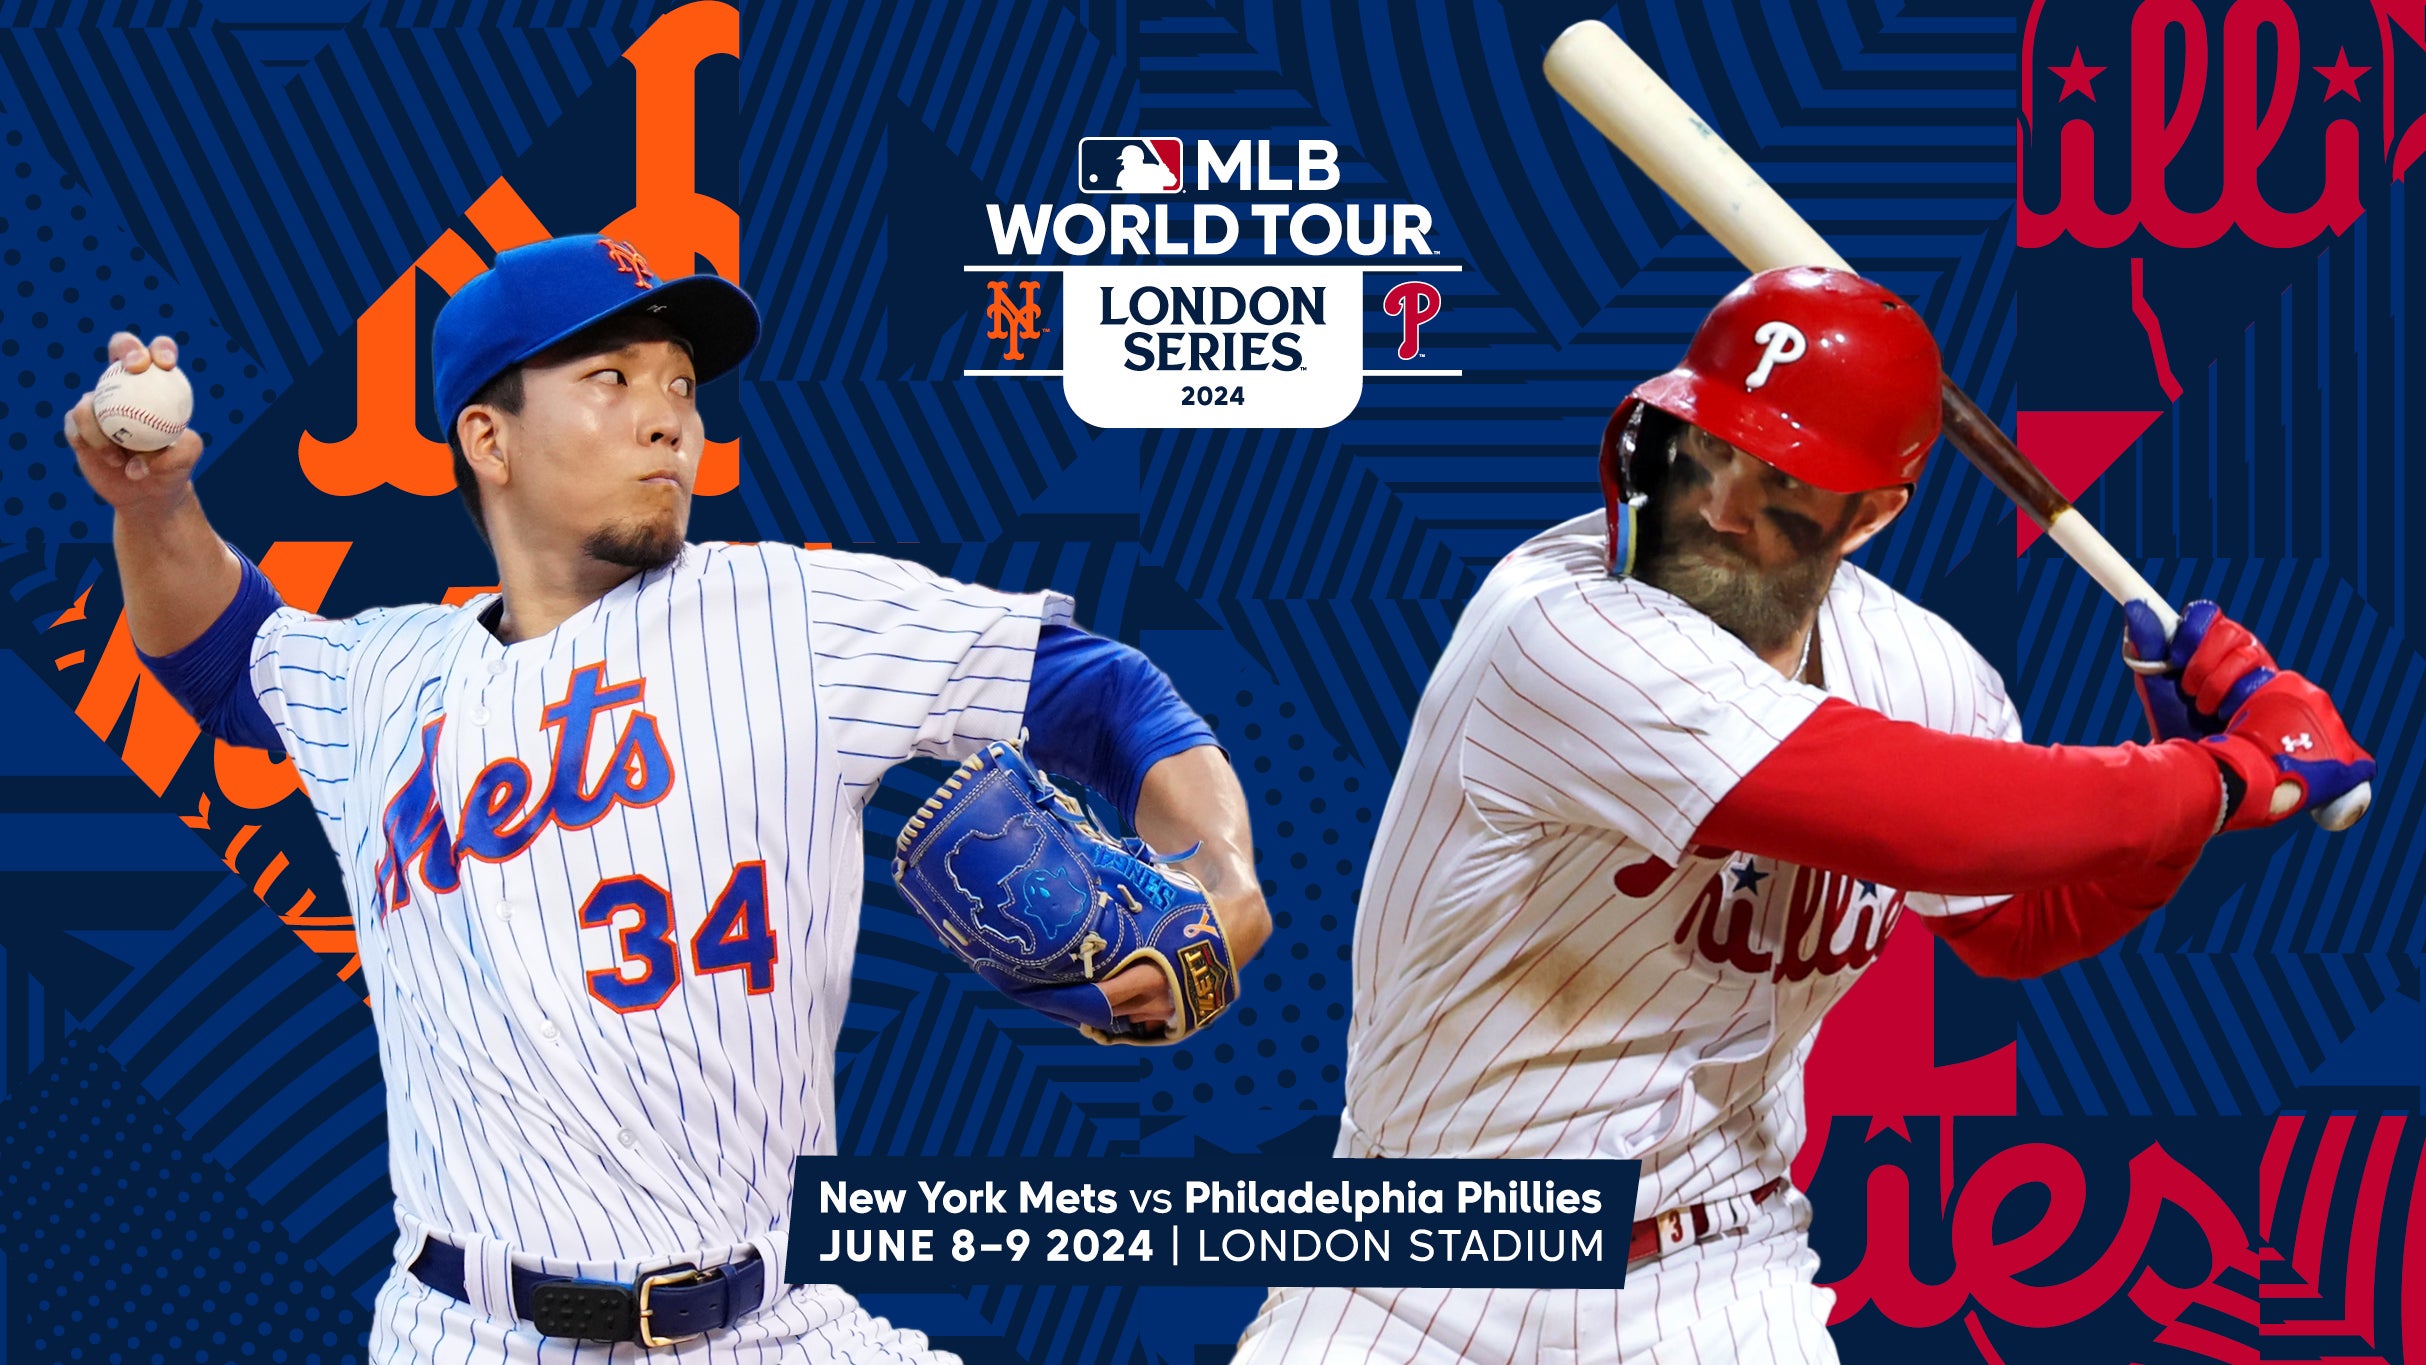 MLB World Tour: London Series - New York Mets v Philadelphia Phillies Event Title Pic